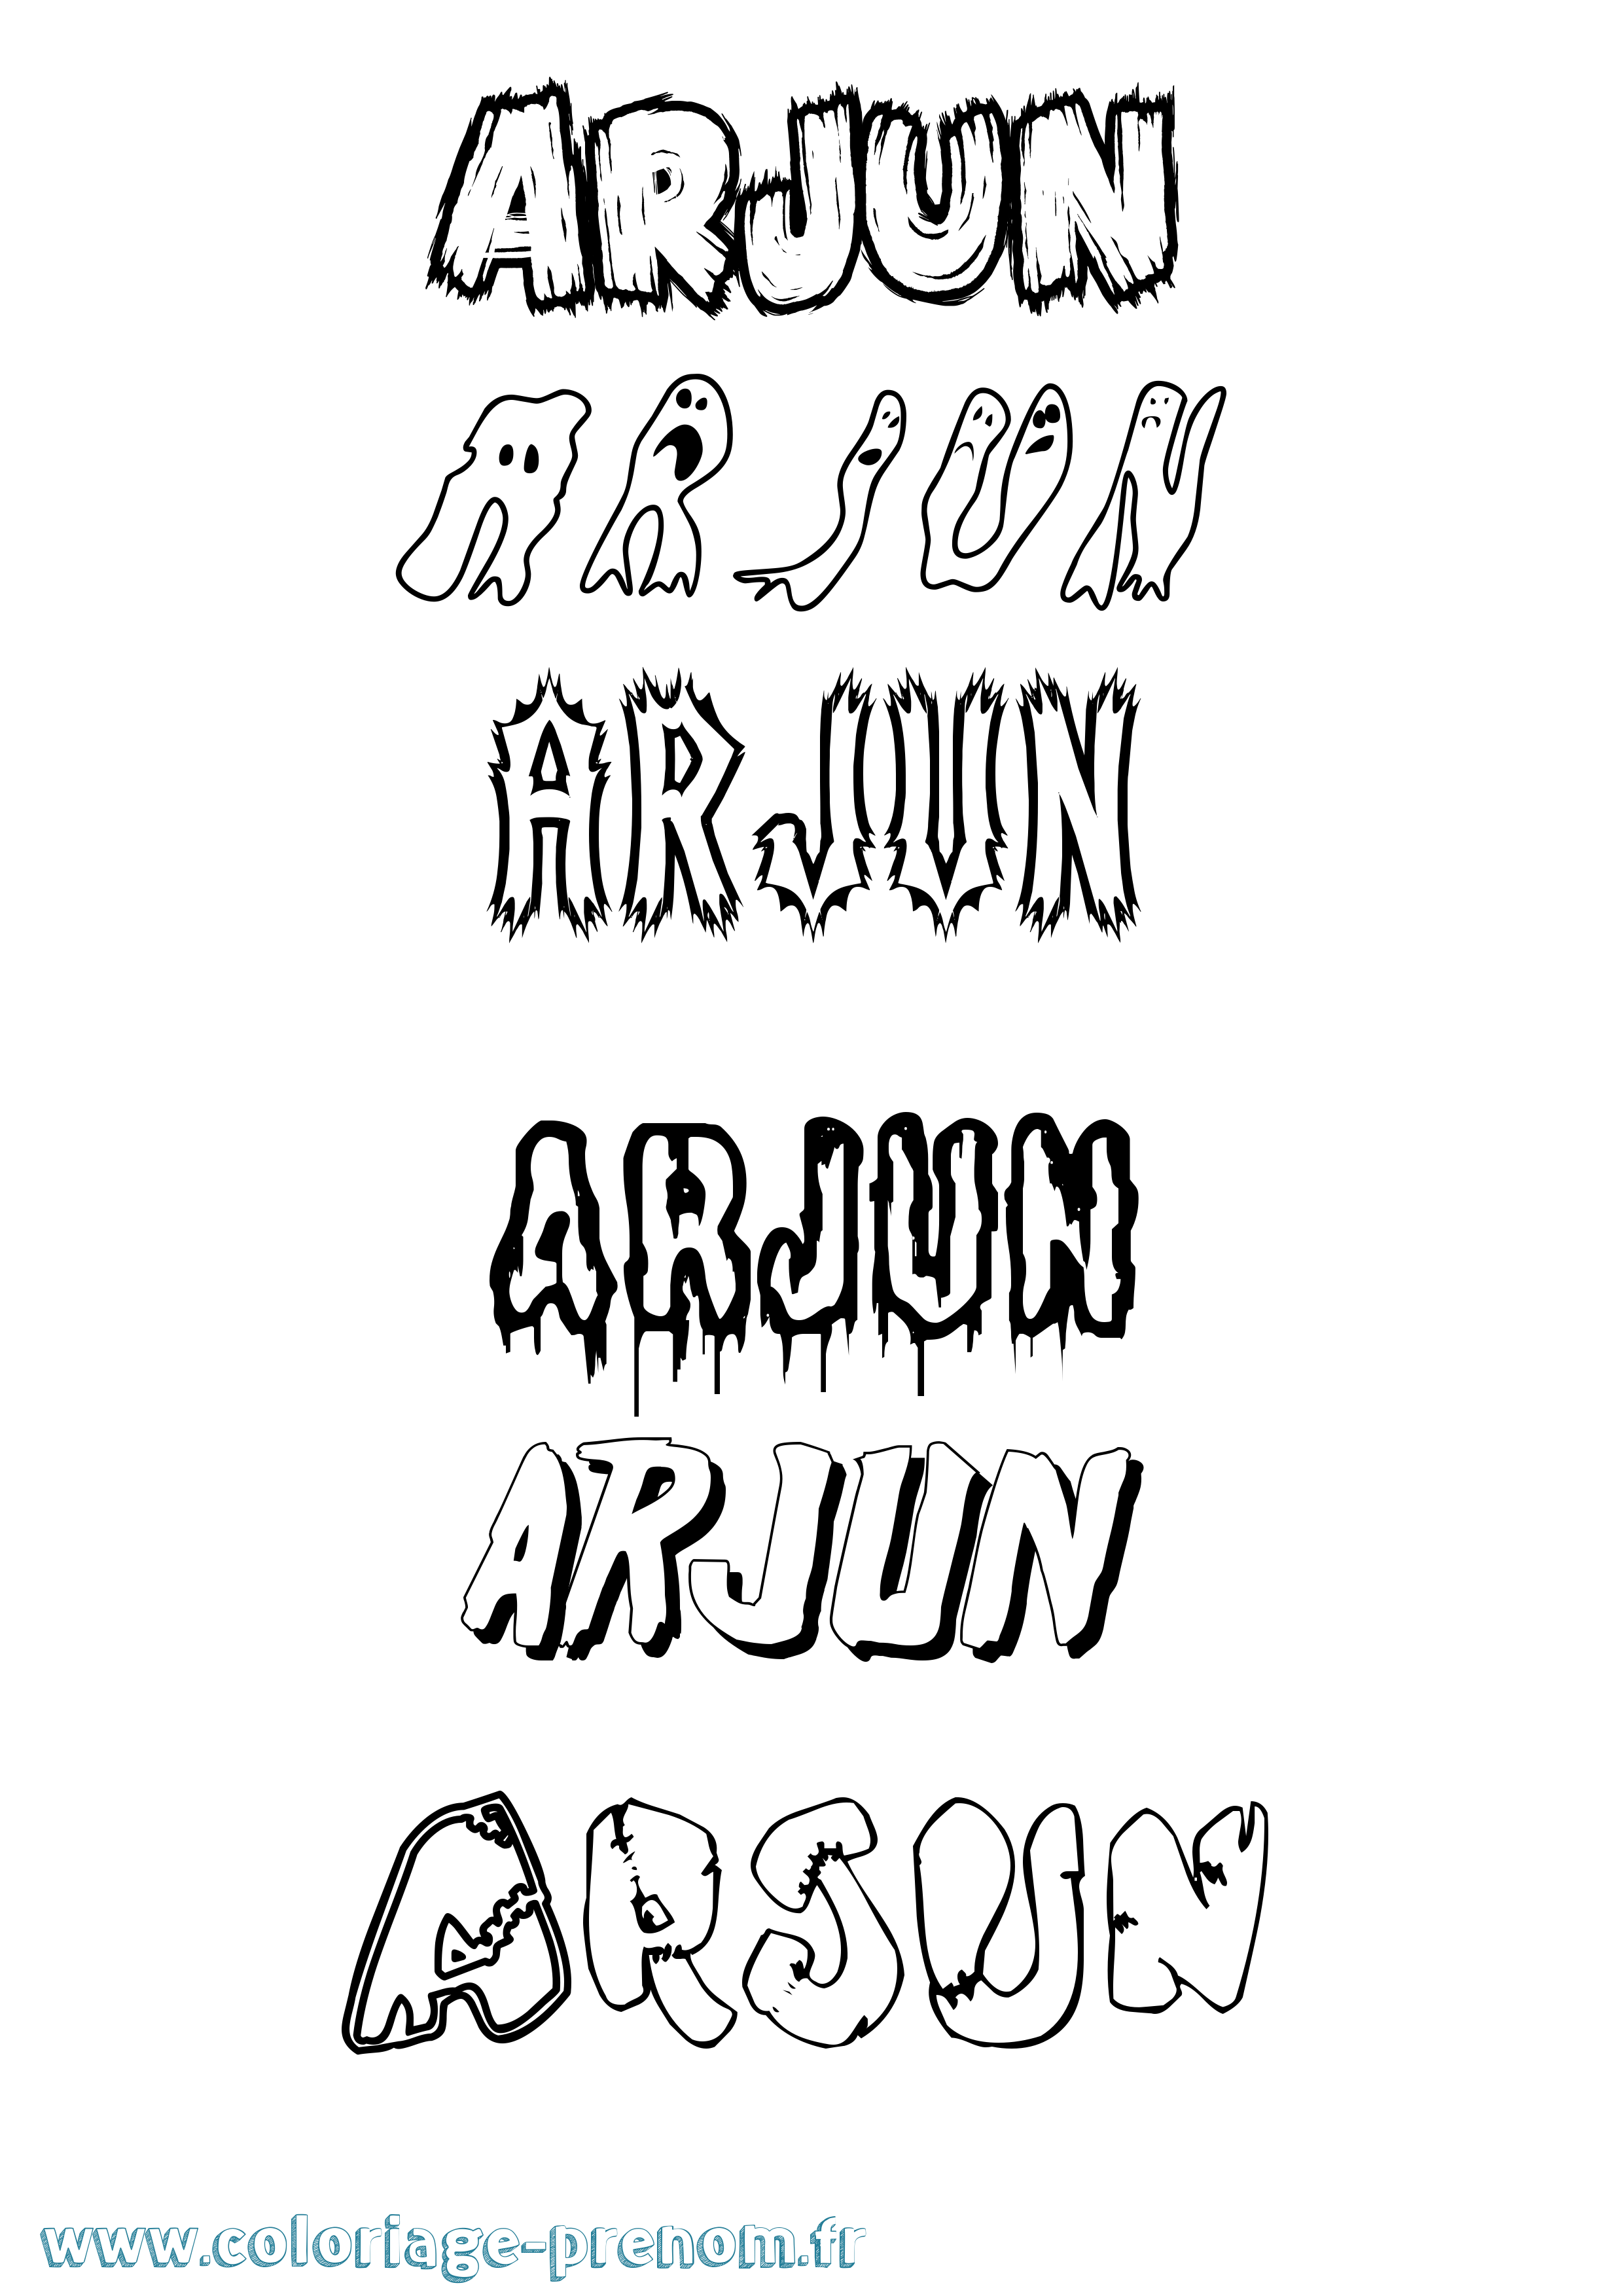 Coloriage prénom Arjun Frisson